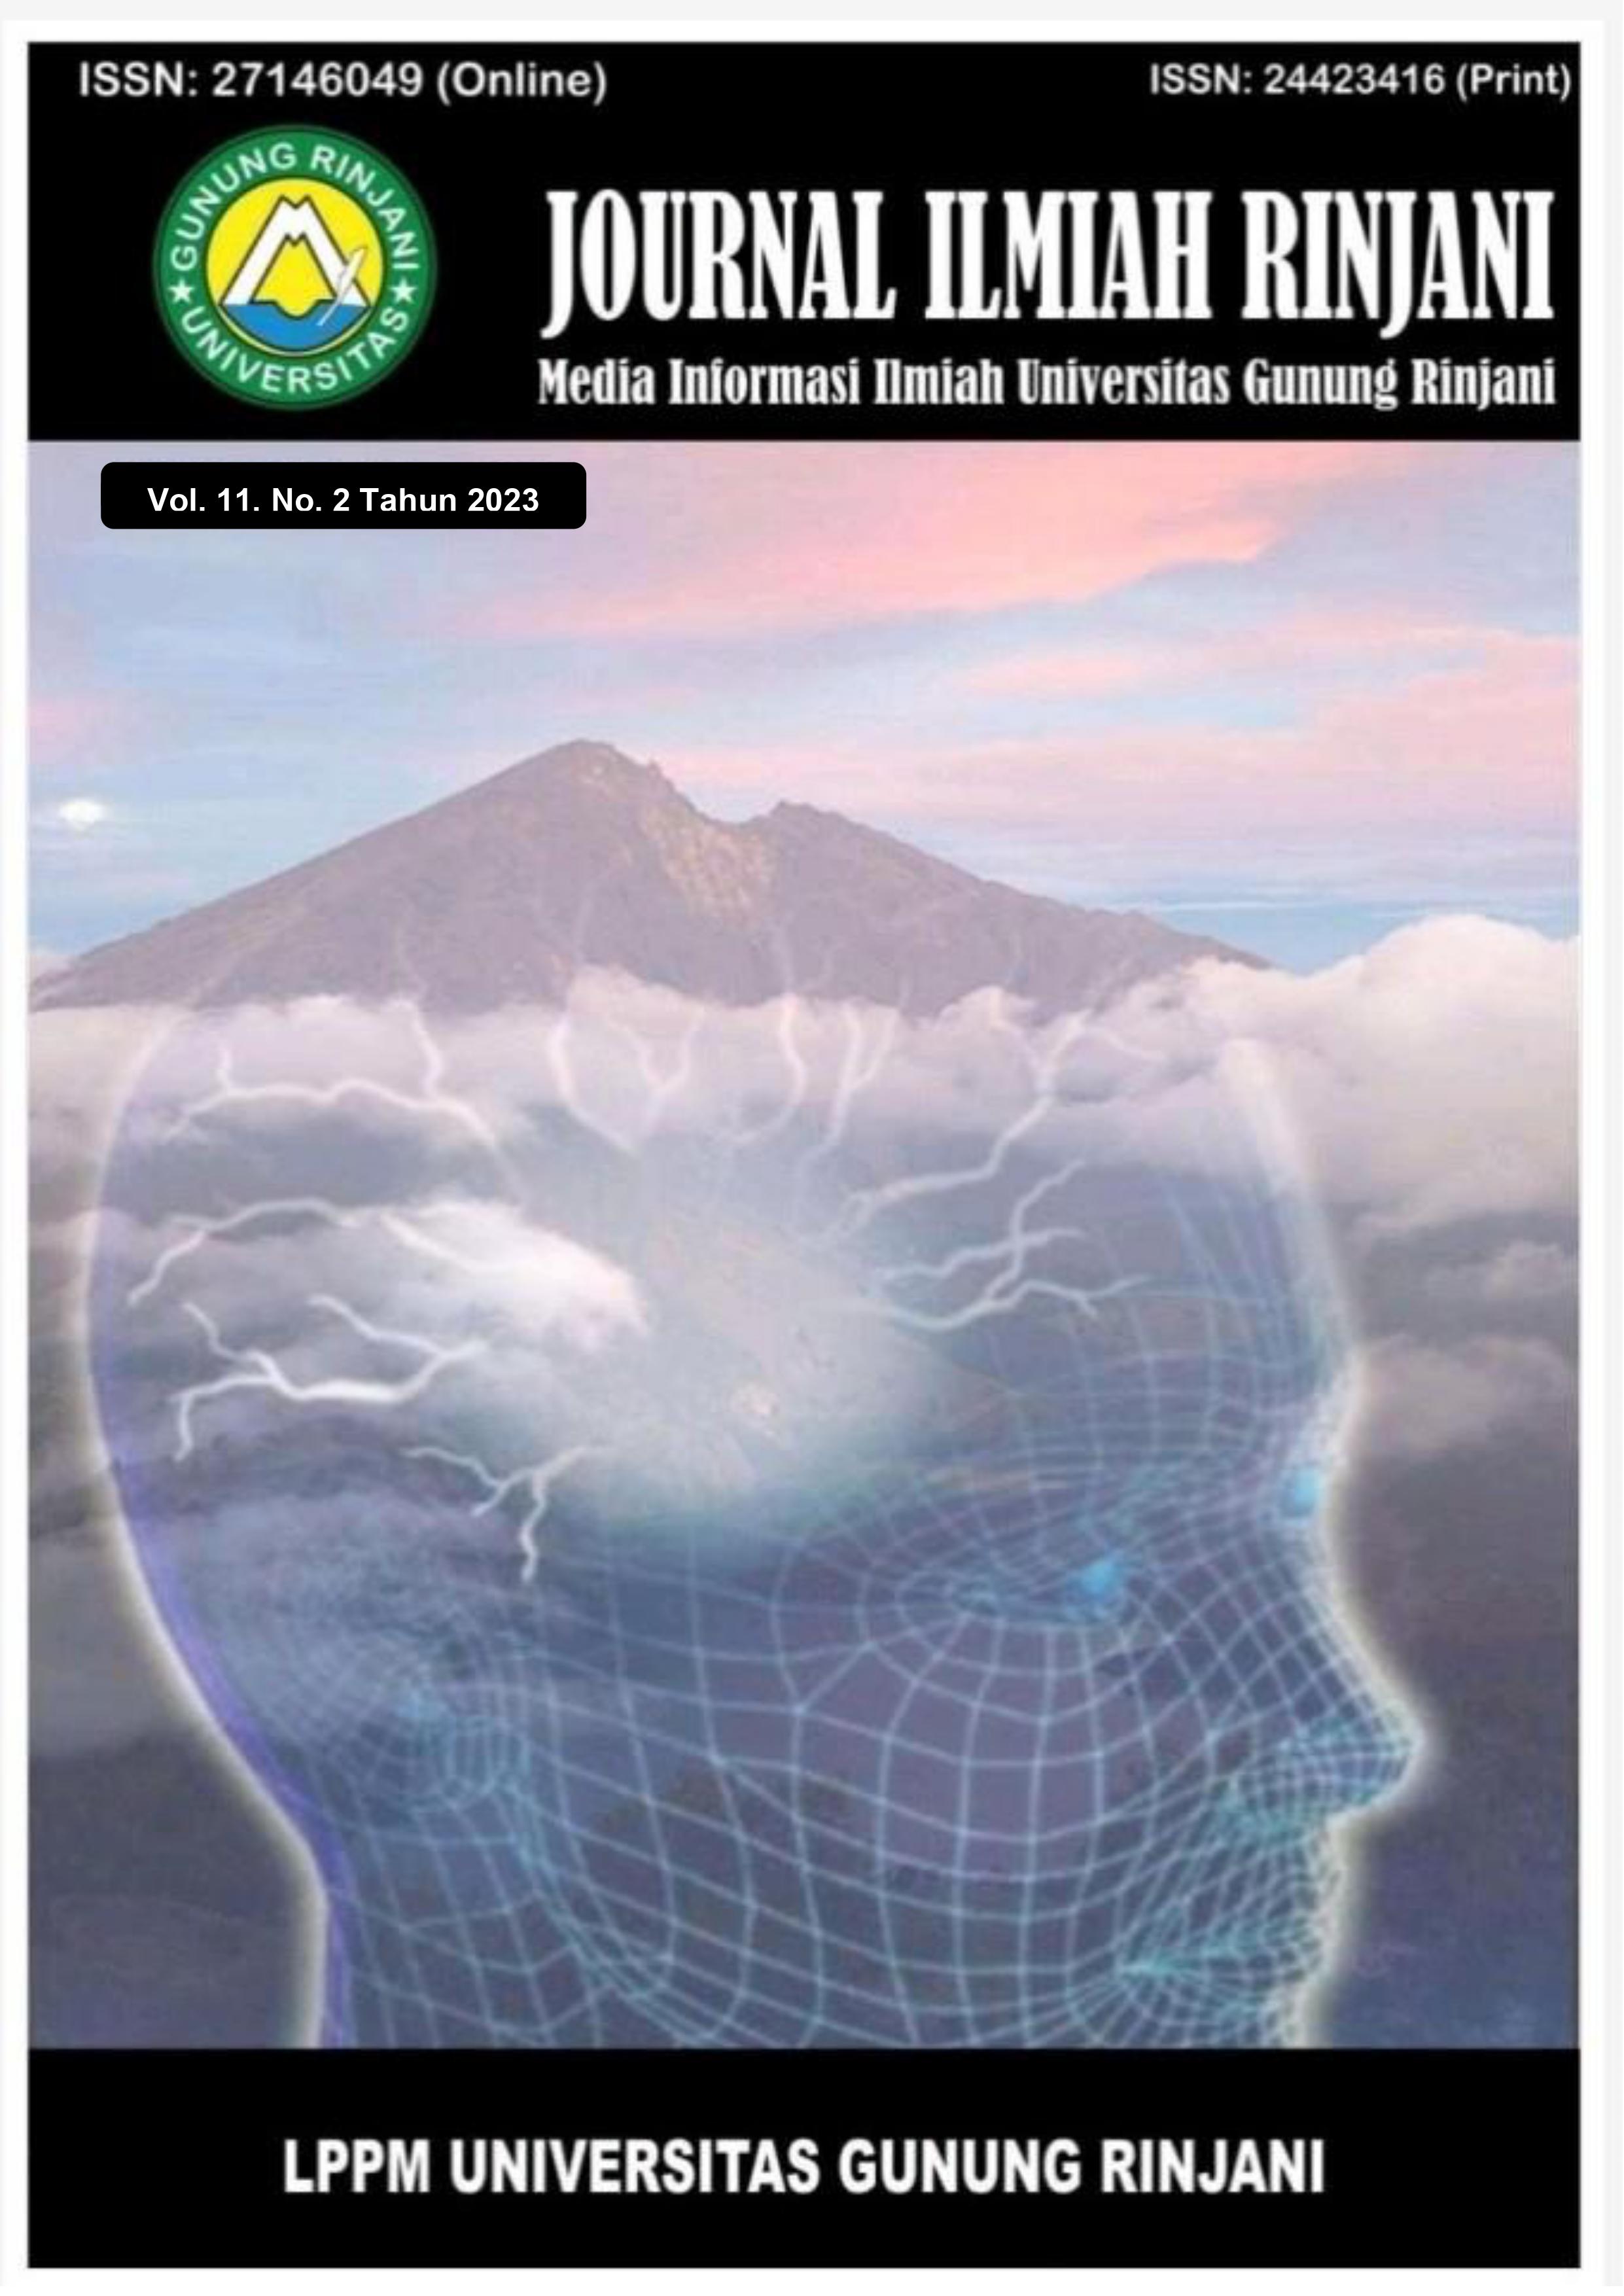 					View Vol. 11 No. 2 (2023): Journal Ilmiah Rinjani: Media Informasi Ilmiah Universitas Gunung Rinjani
				